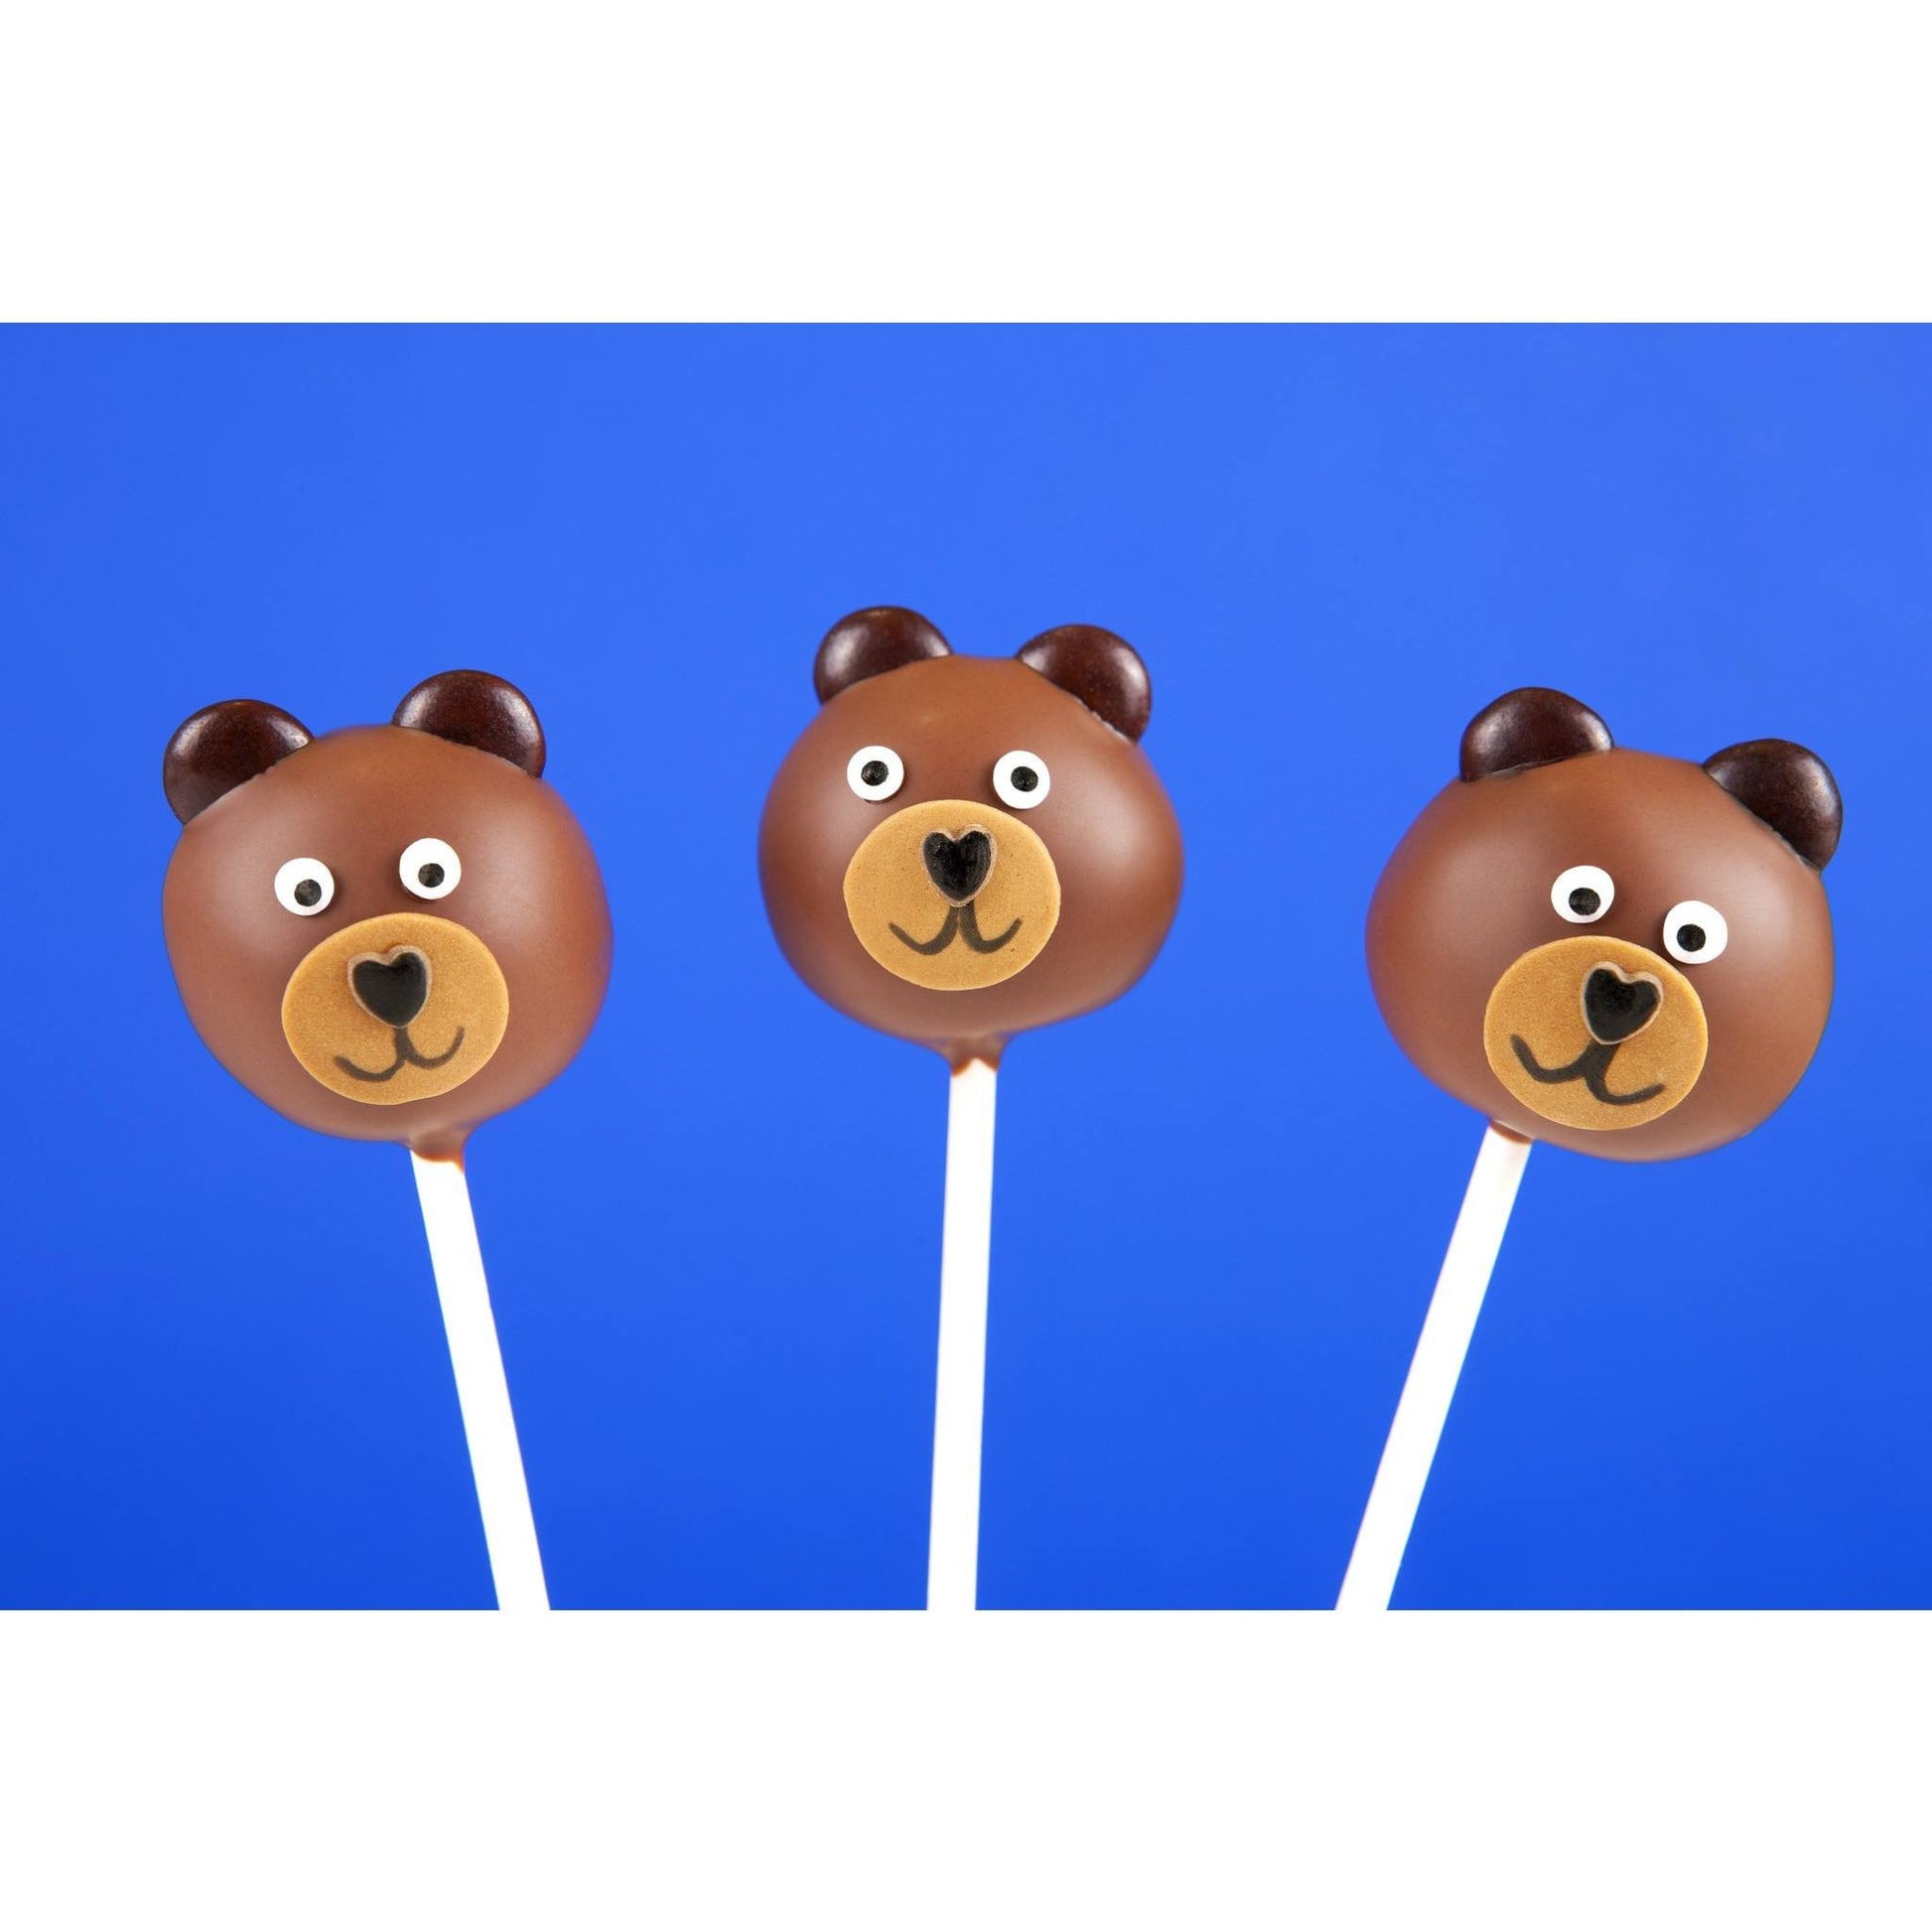 Buy Cake Pops Bears By Cake Pop Parties order online - Cake Pops Parties